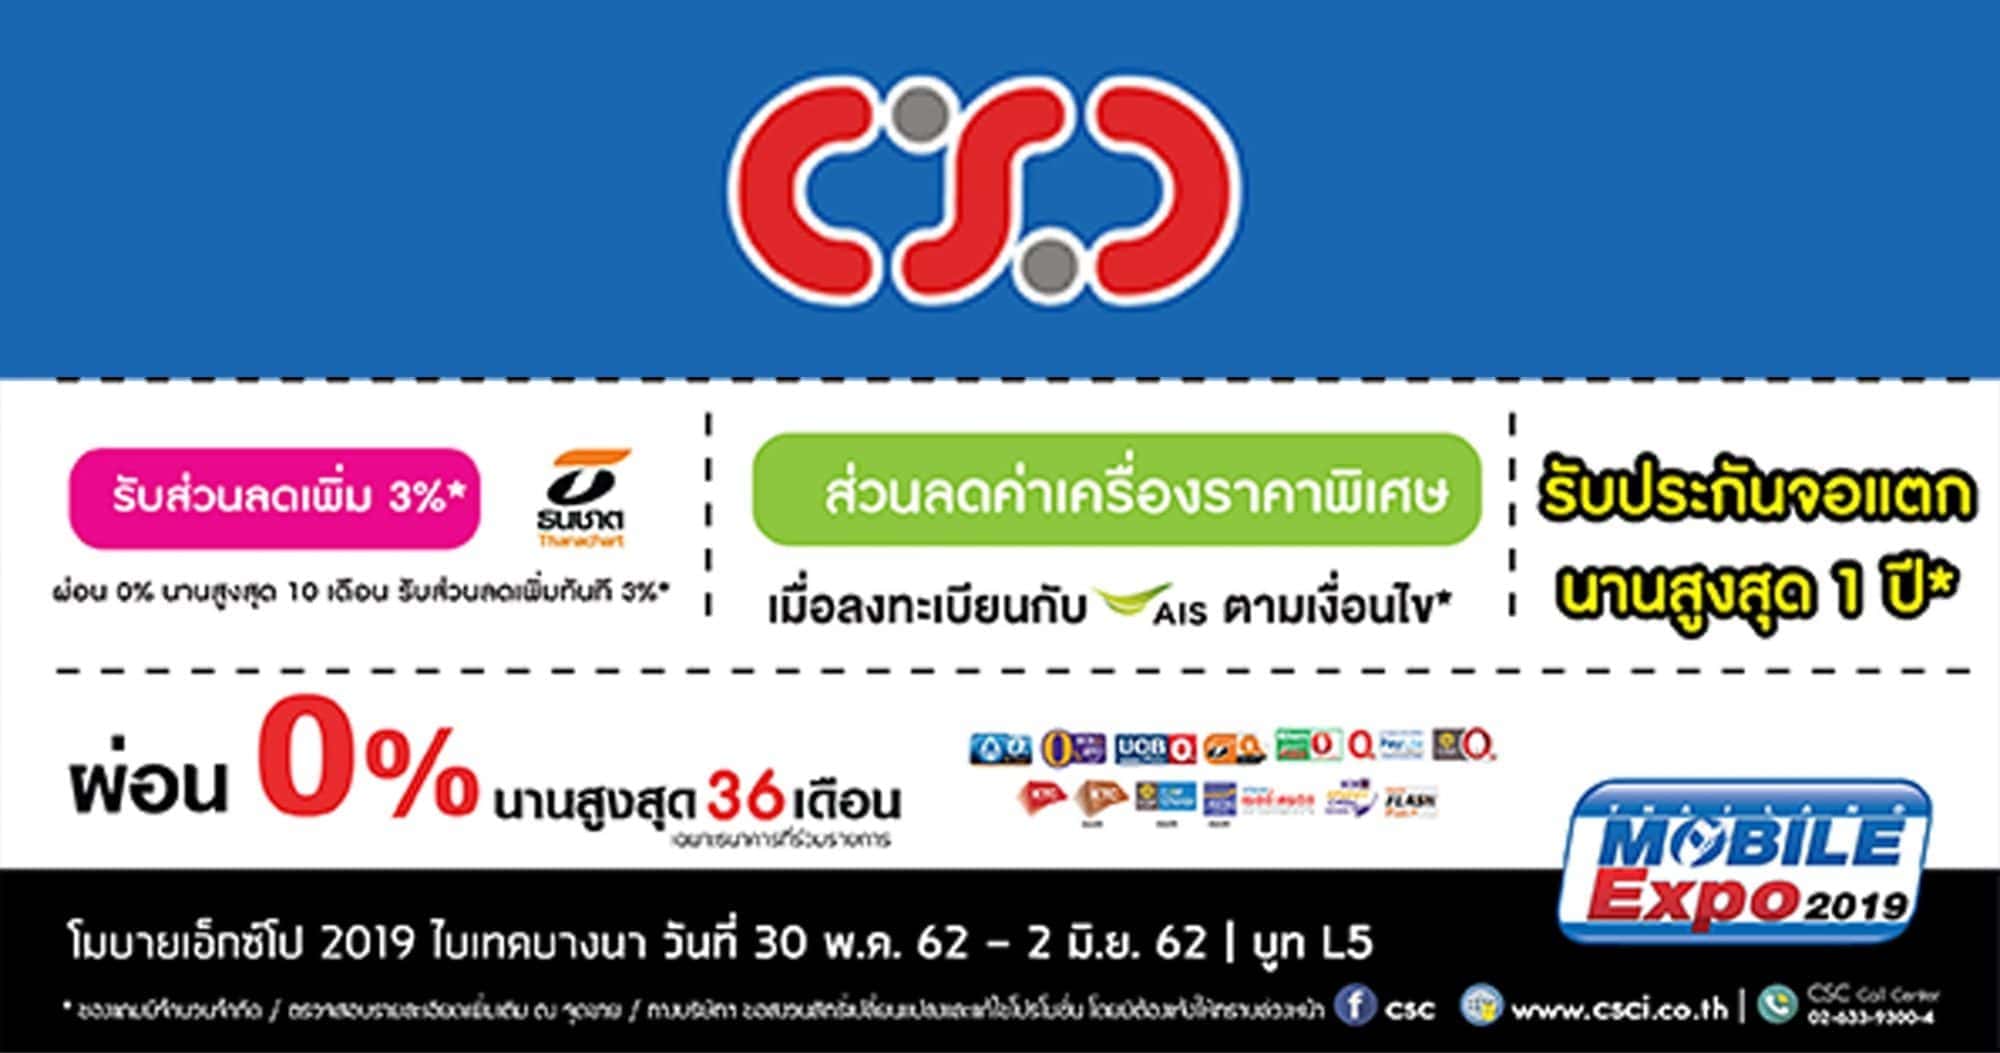 CSC จัดโปรโมชั่นสุดพิเศษภายในงาน Thailand Mobile Expo 2019 1